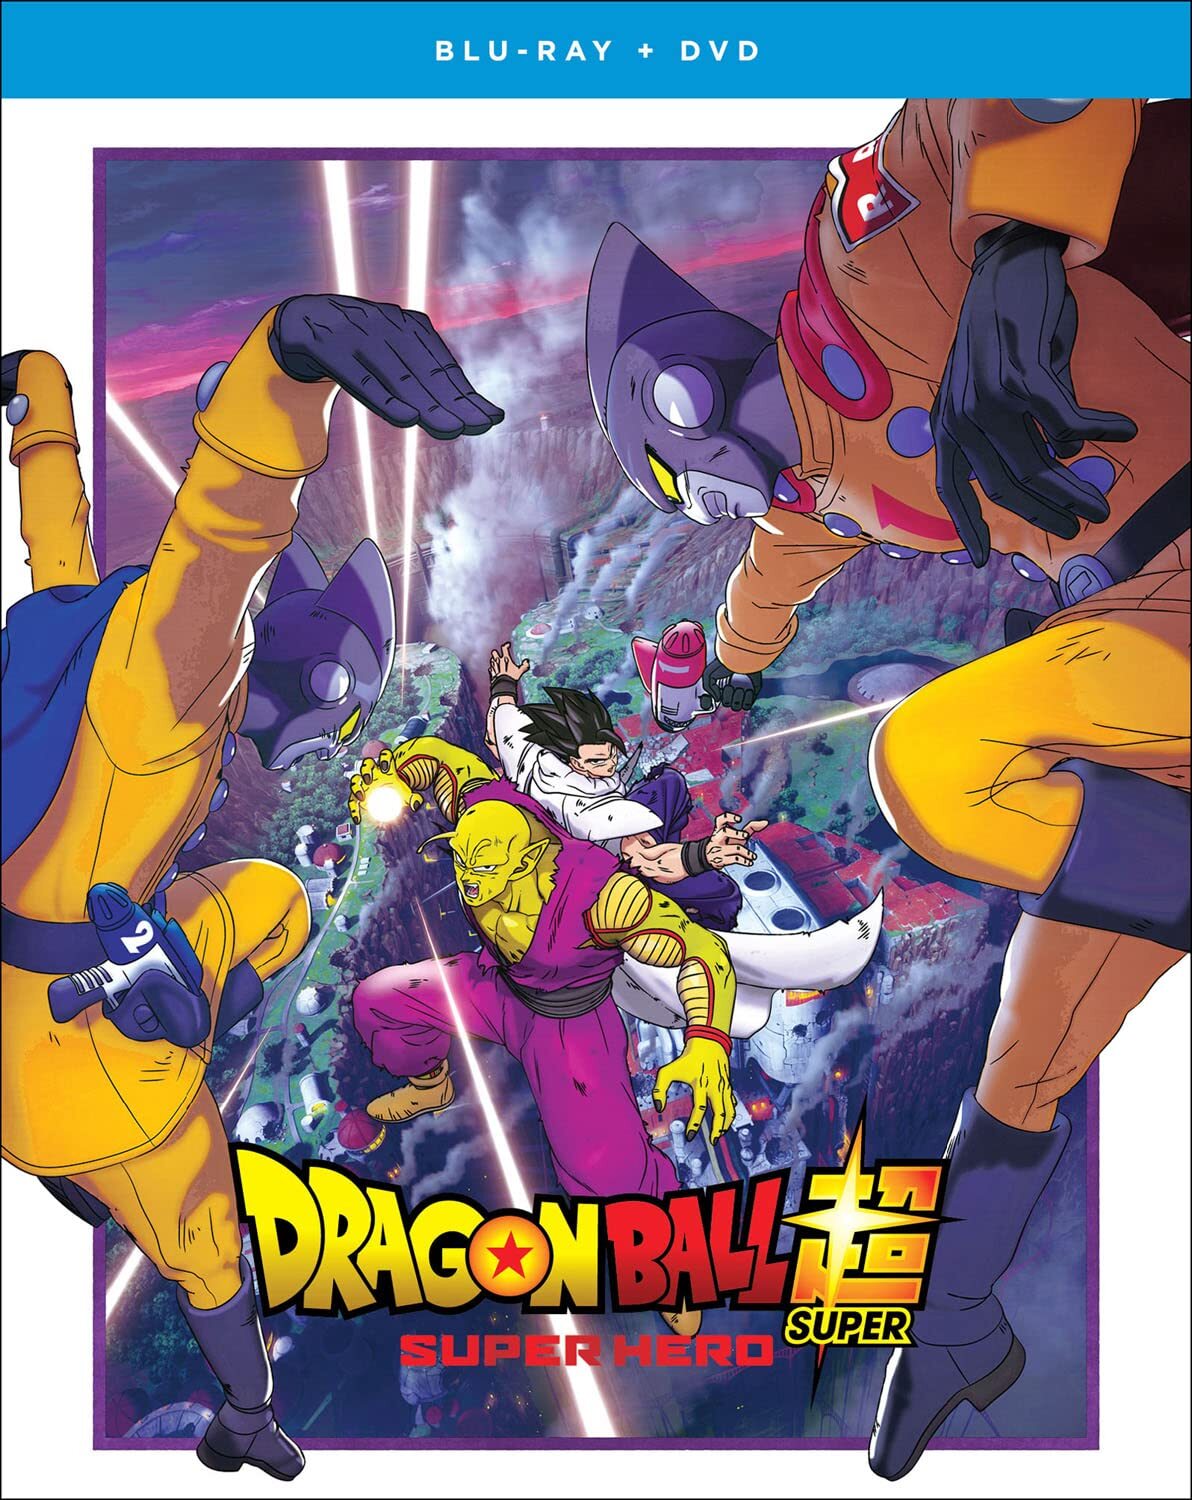 Dragon Ball Super: Super Hero Blu-ray, DVD Among Crunchyroll Releases